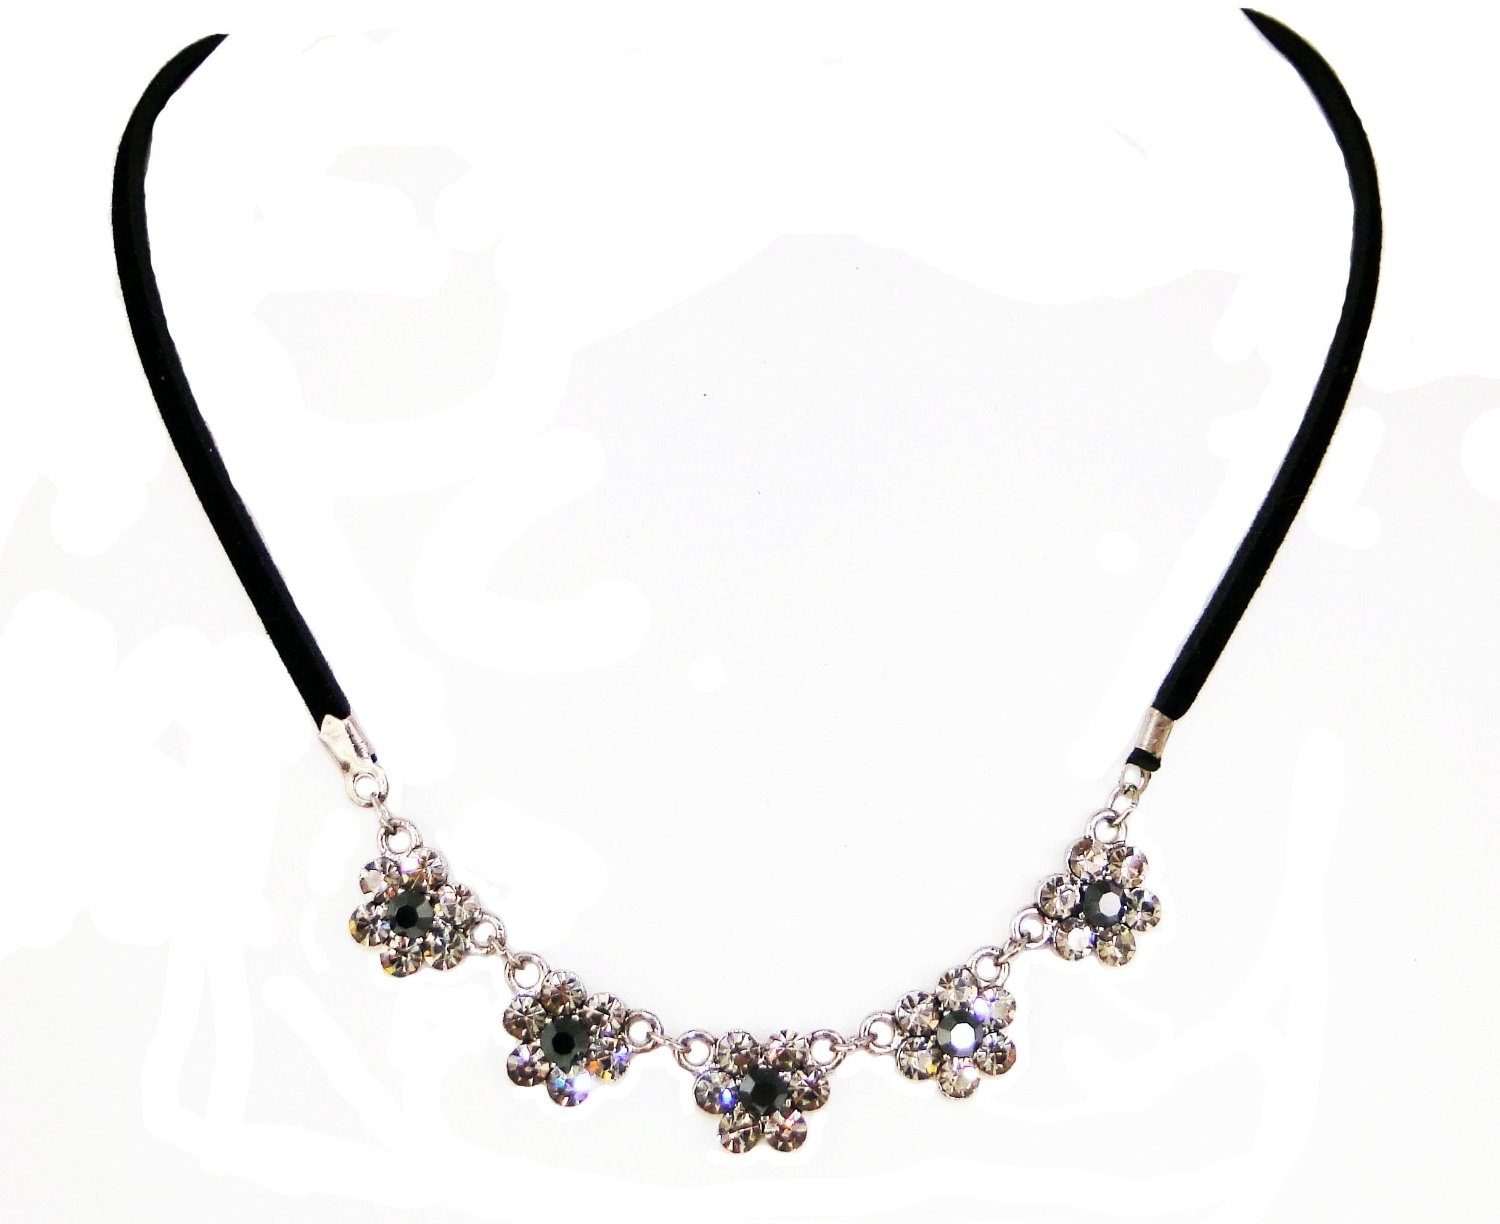 Swarovski Crystals Necklace with 5 Crystal Flowers - Jet Hematite Black Diamond $12.99